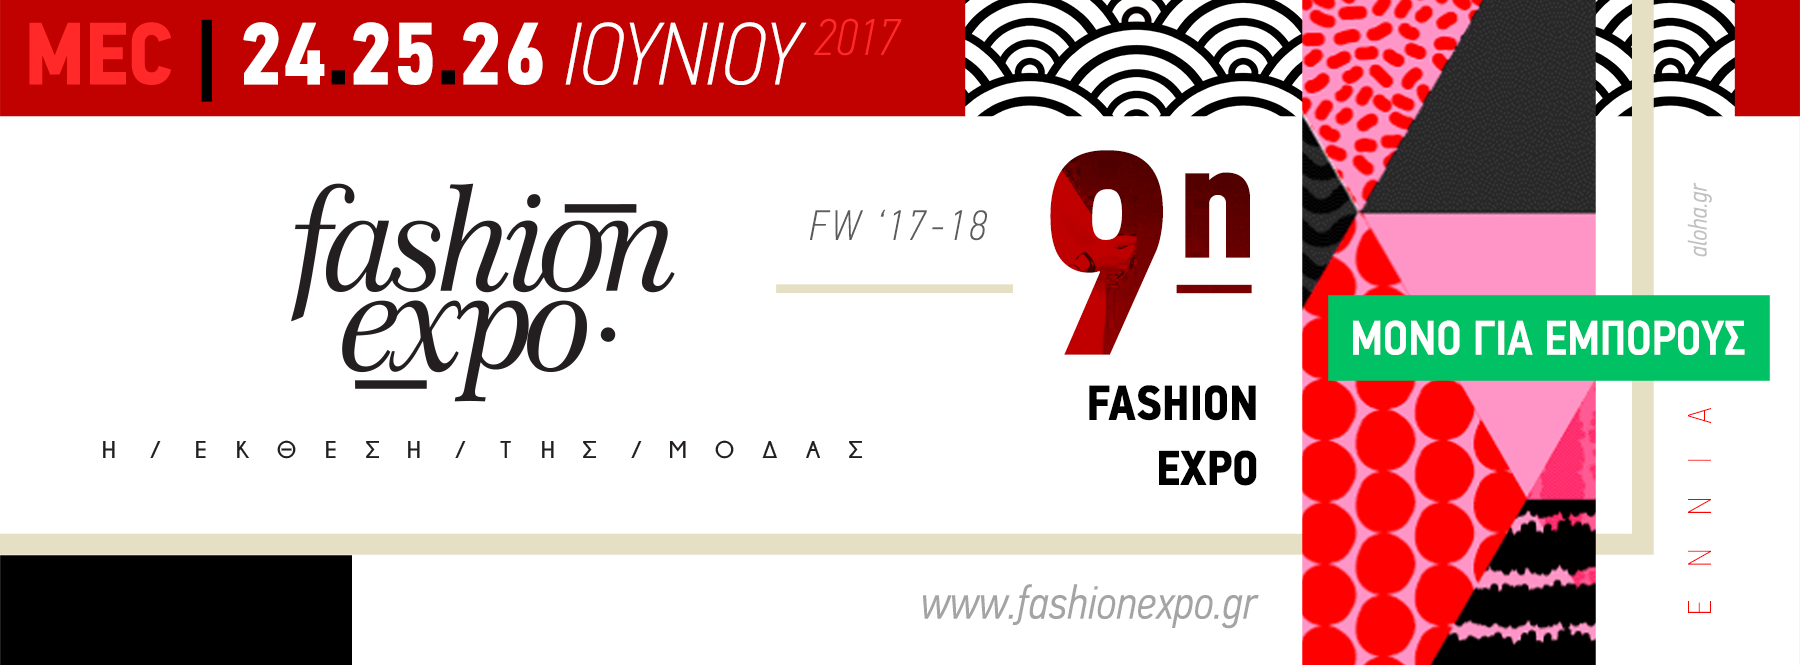 fashionexpo iounios2017 F190136073.jpg